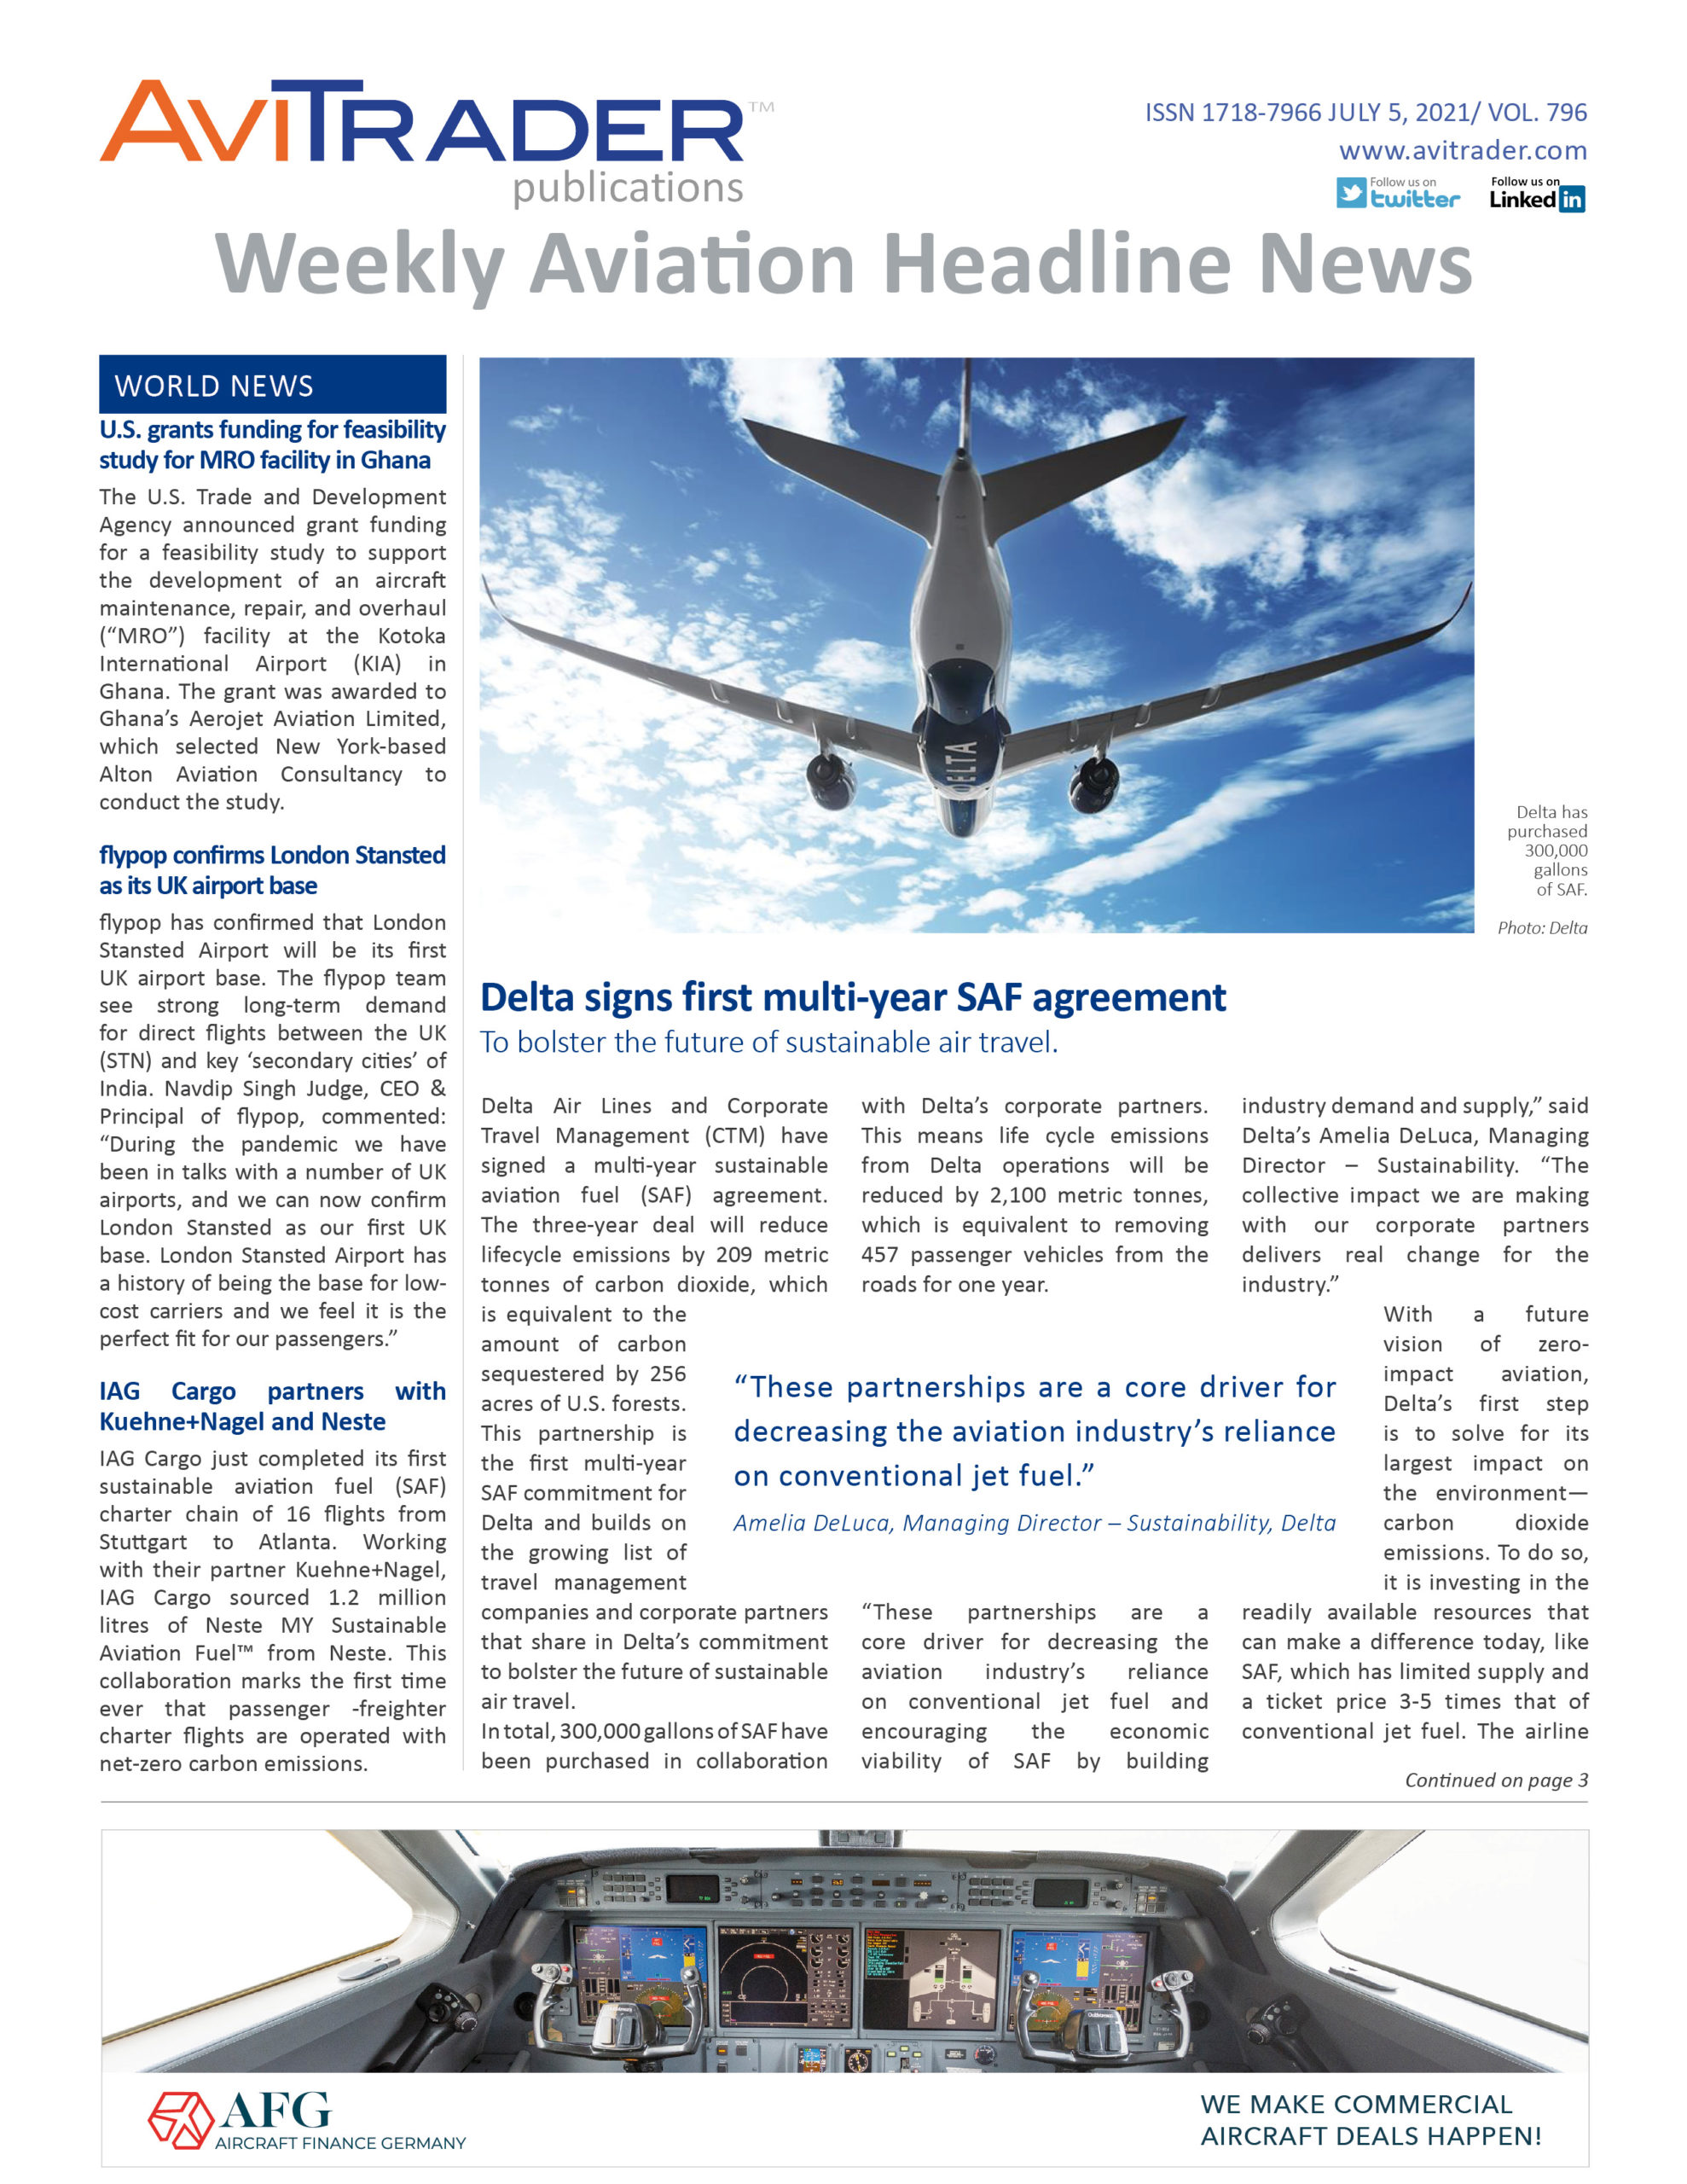 AviTrader_Weekly_Headline_News_Cover_2021-07-05